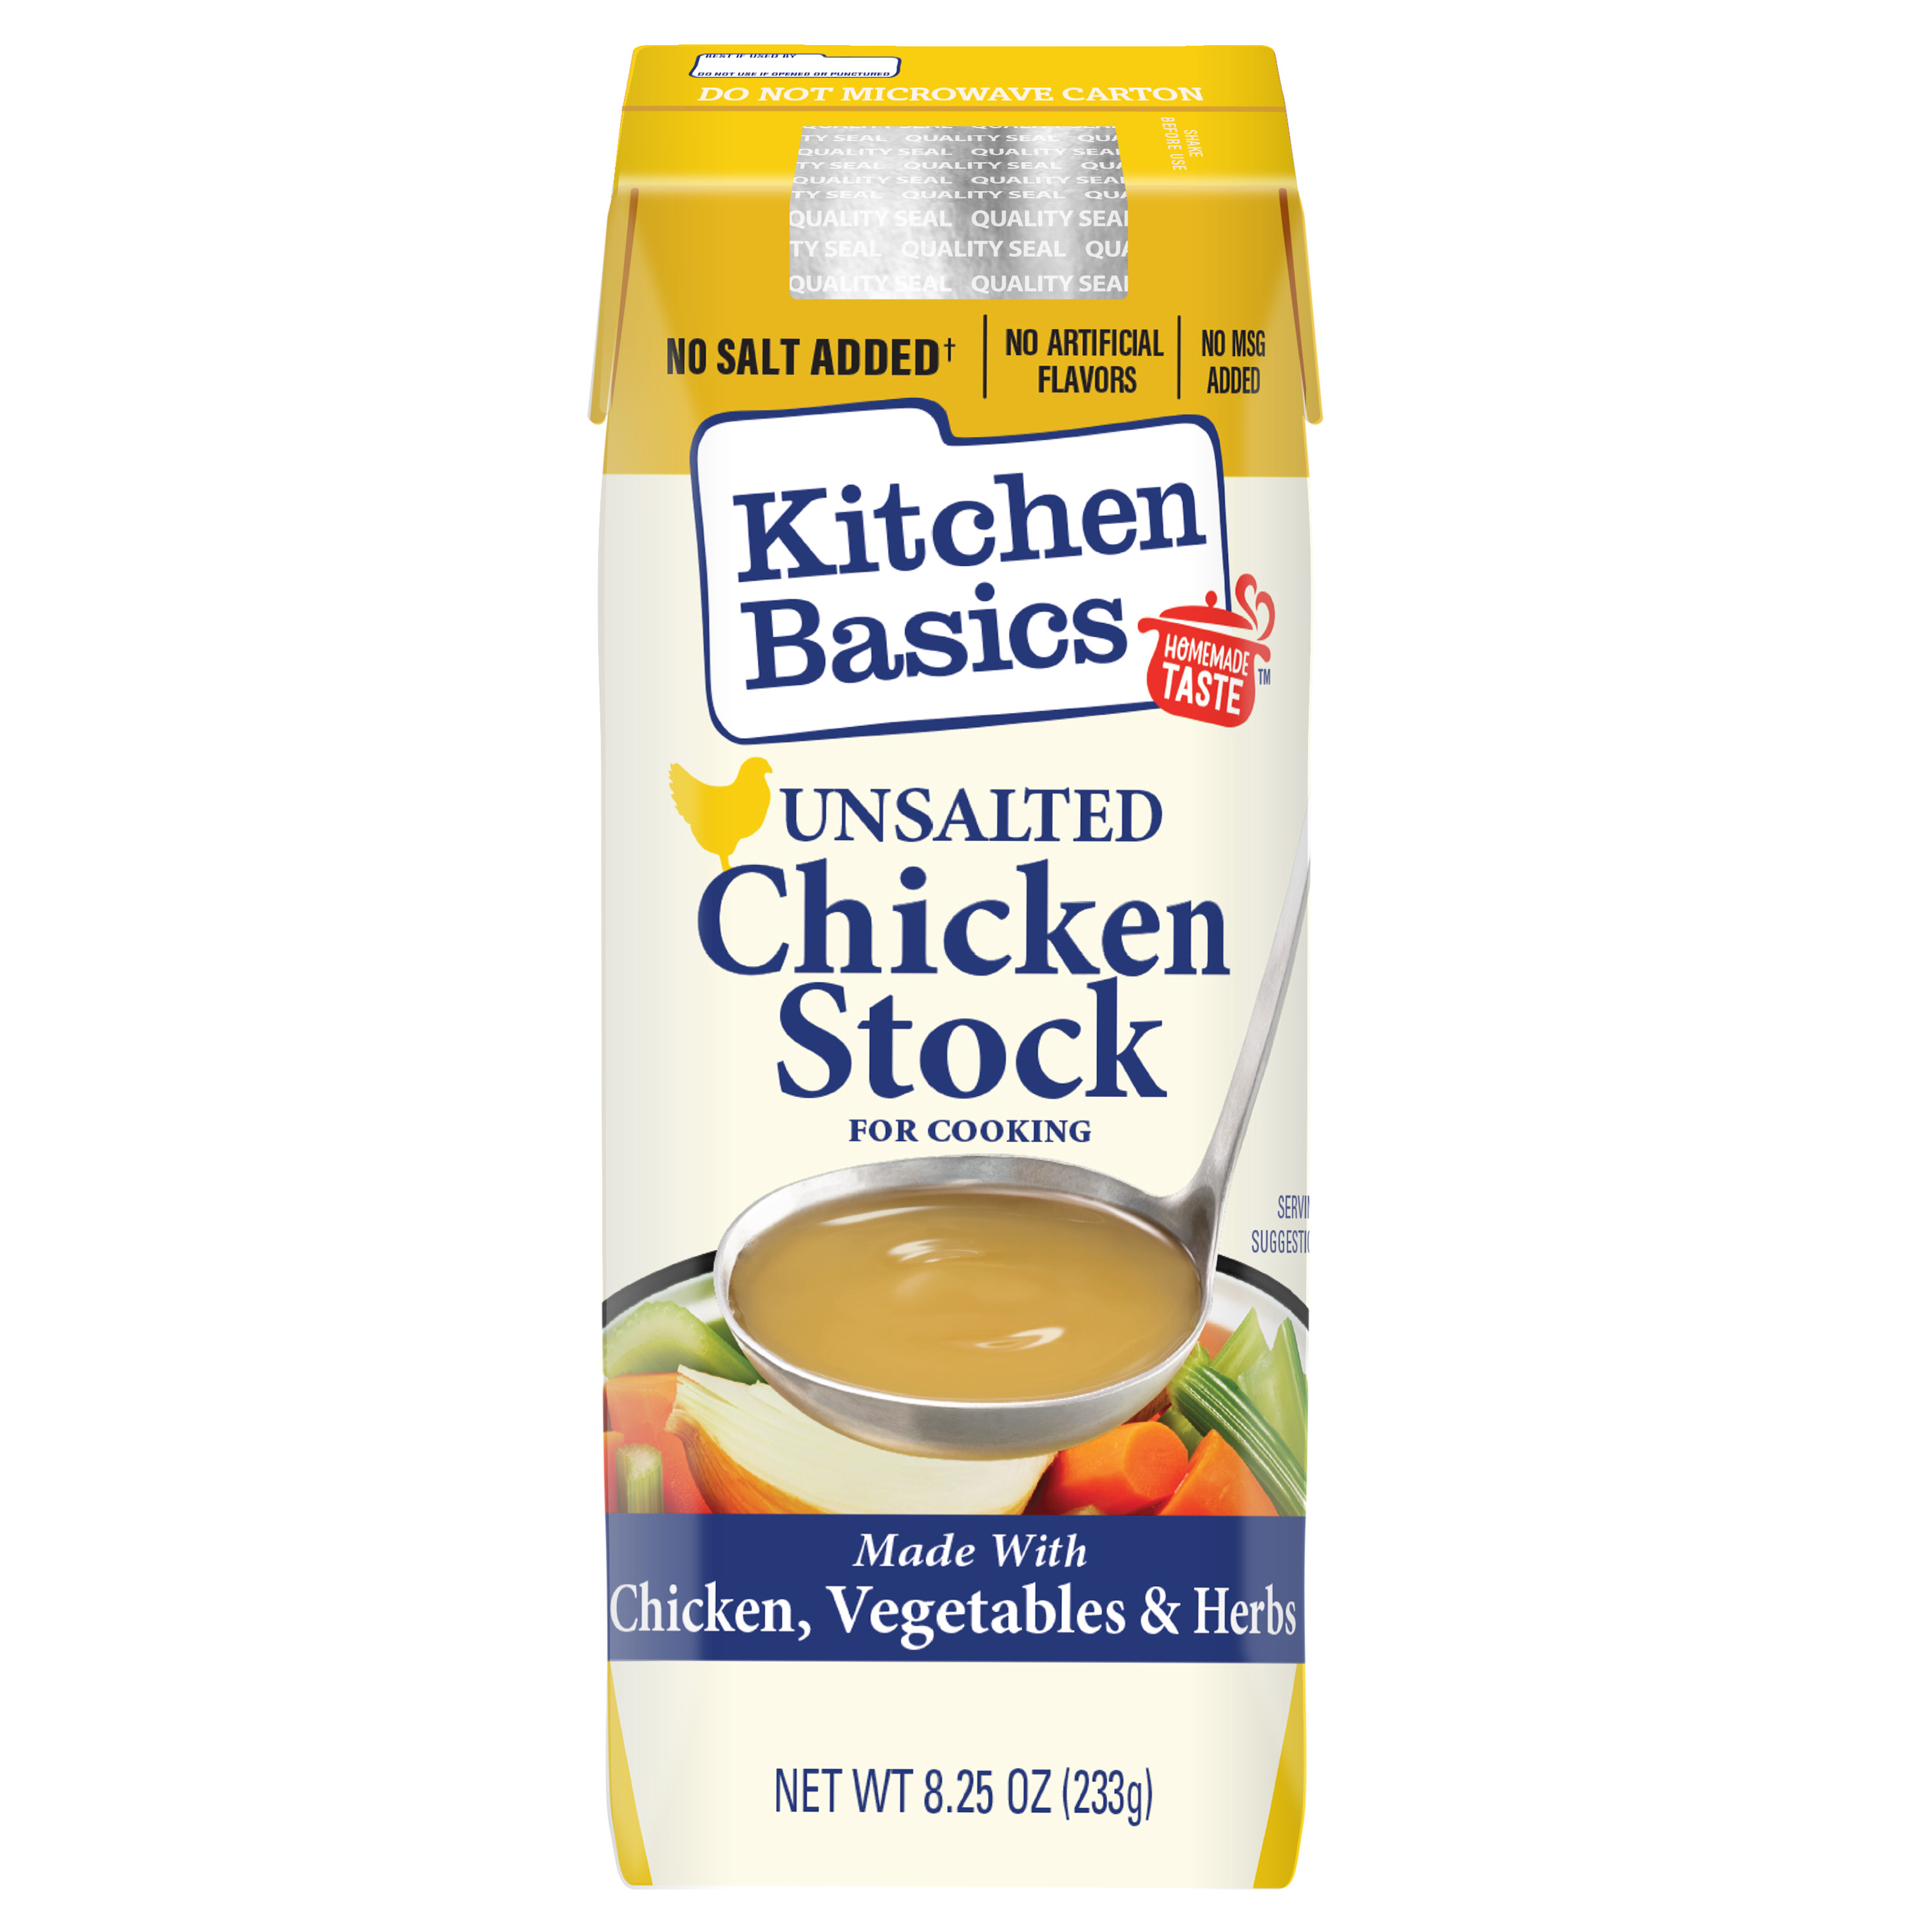 Kitchen Basics Unsalted Chicken Stock, 8.25 oz Carton, front